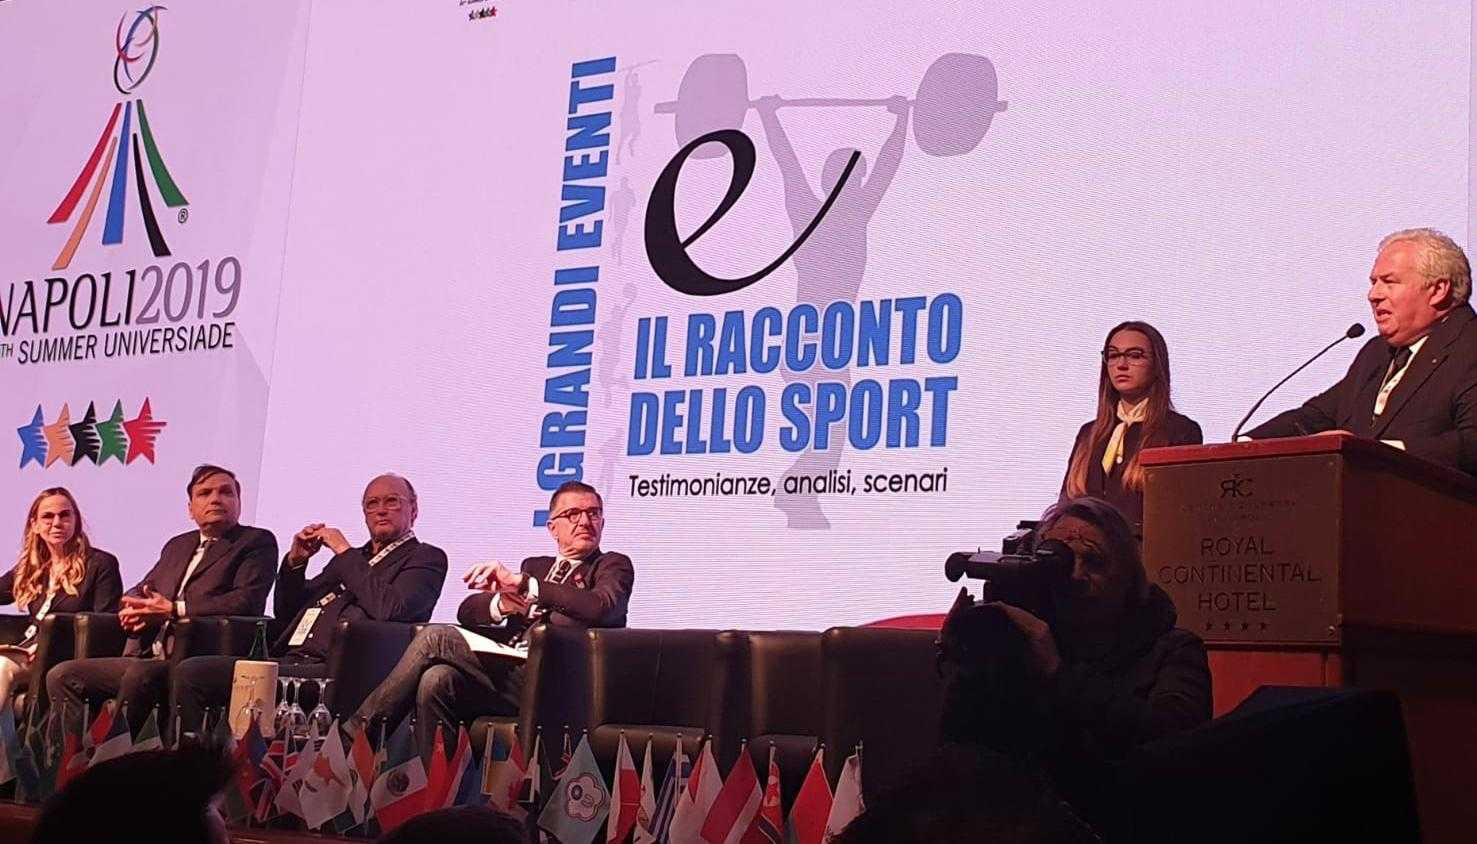 International Sports Press Association Europe holds 2019 Summer Universiade symposium in Naples